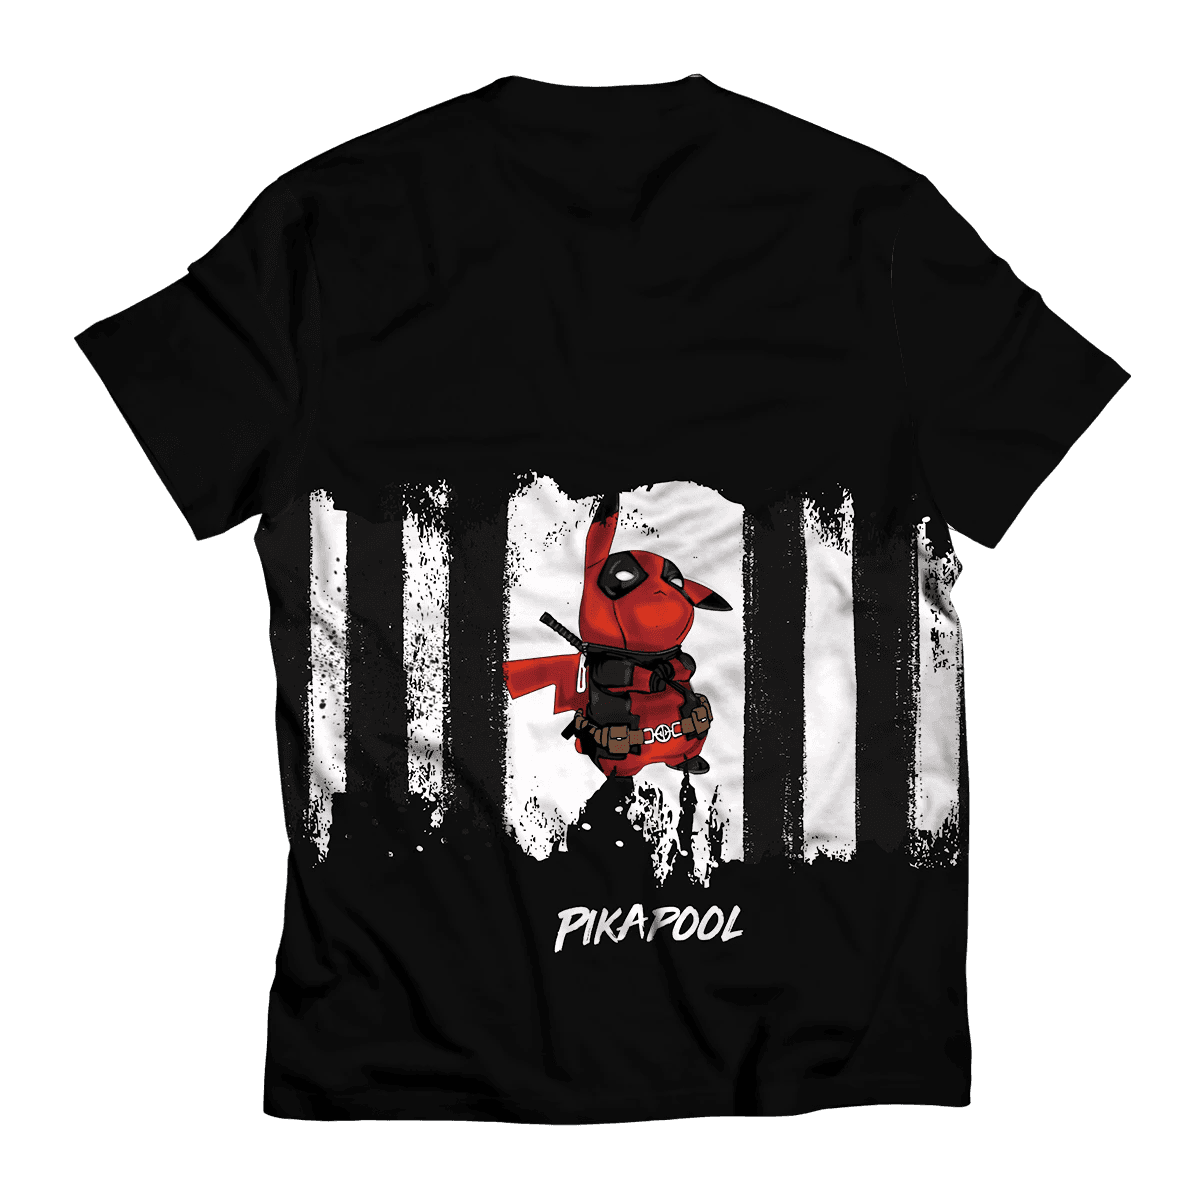 Pikapool Unisex T-Shirt